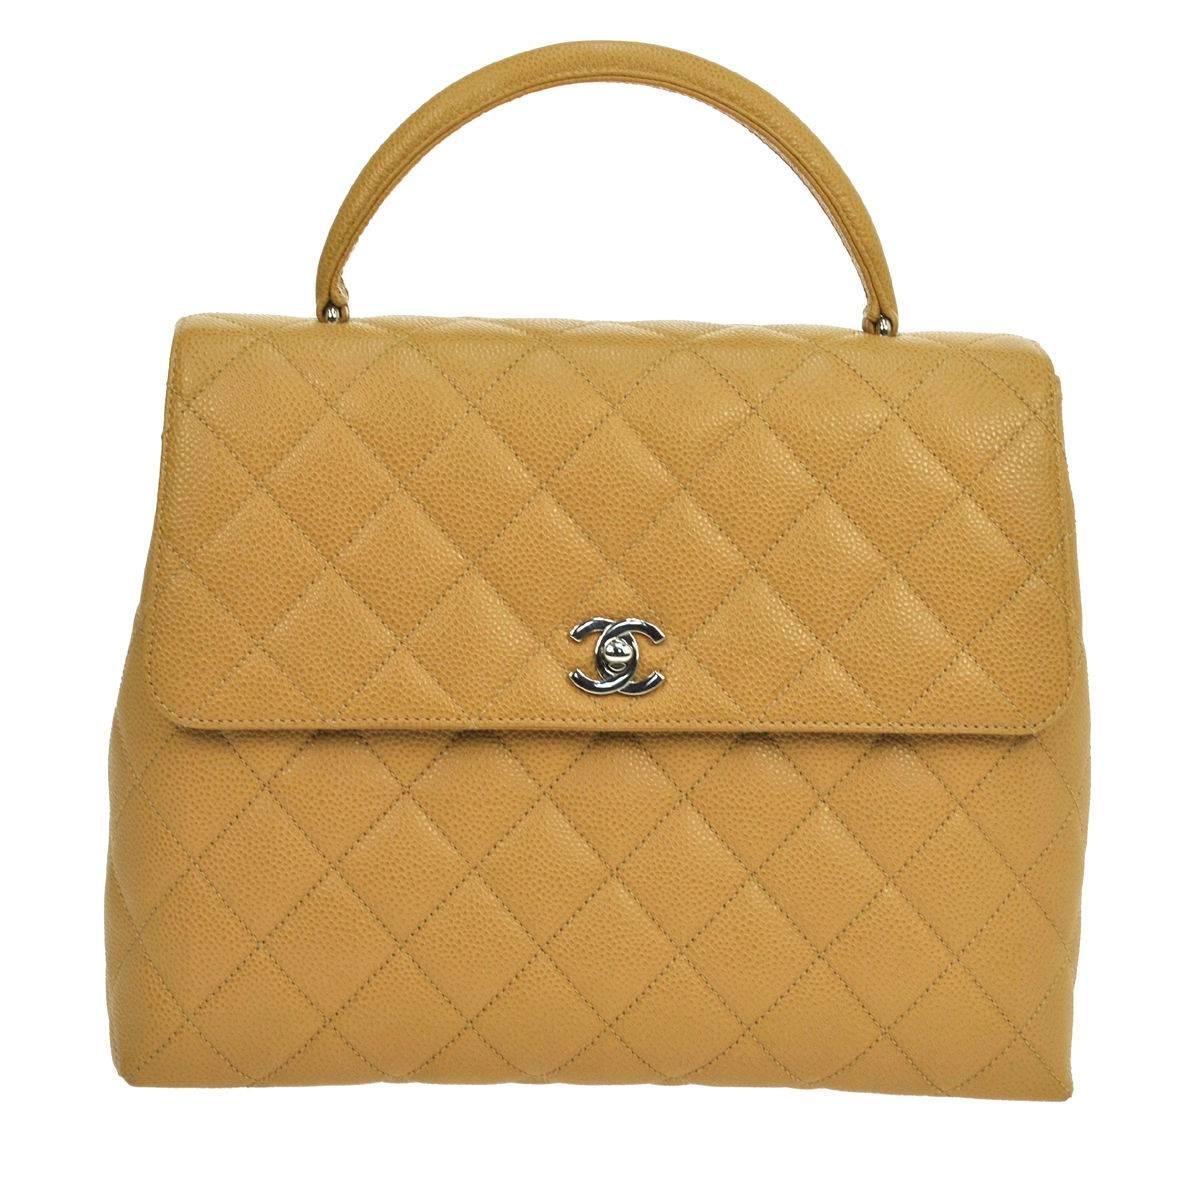 Chanel Nude Caviar Silver Kelly Style Satchel Flap Bag W/Box